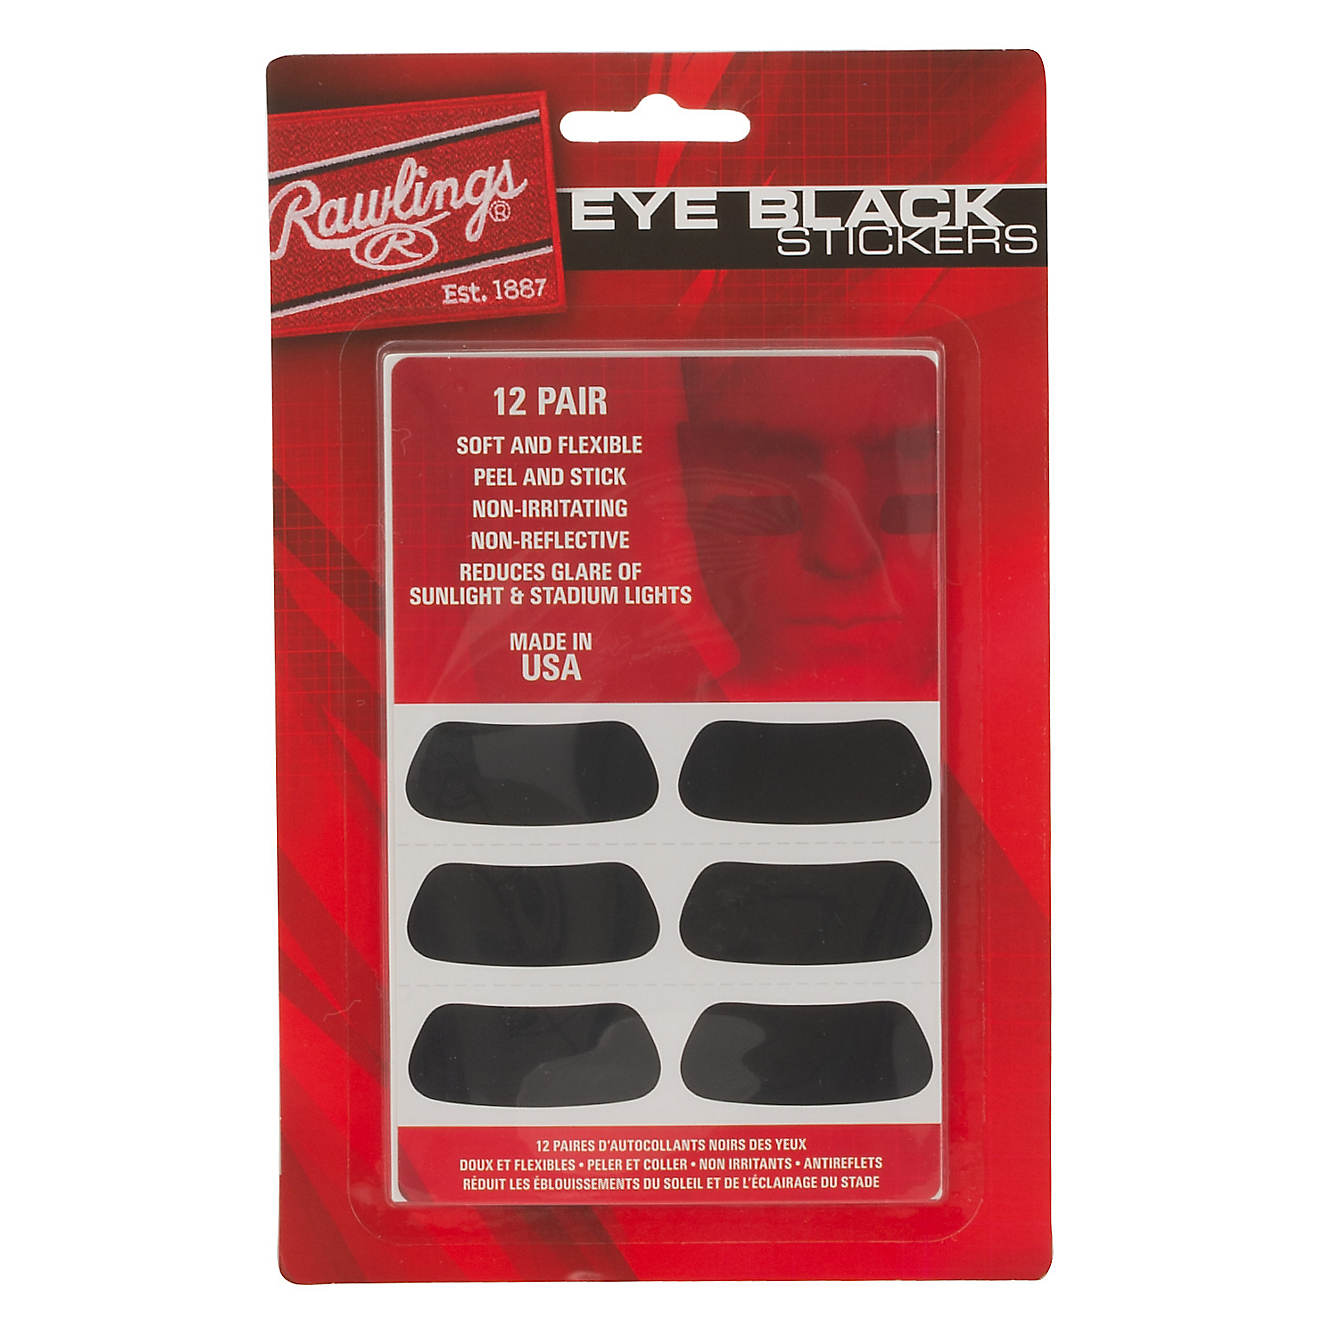 Rawlings Eye Black Stickers 12-Pack